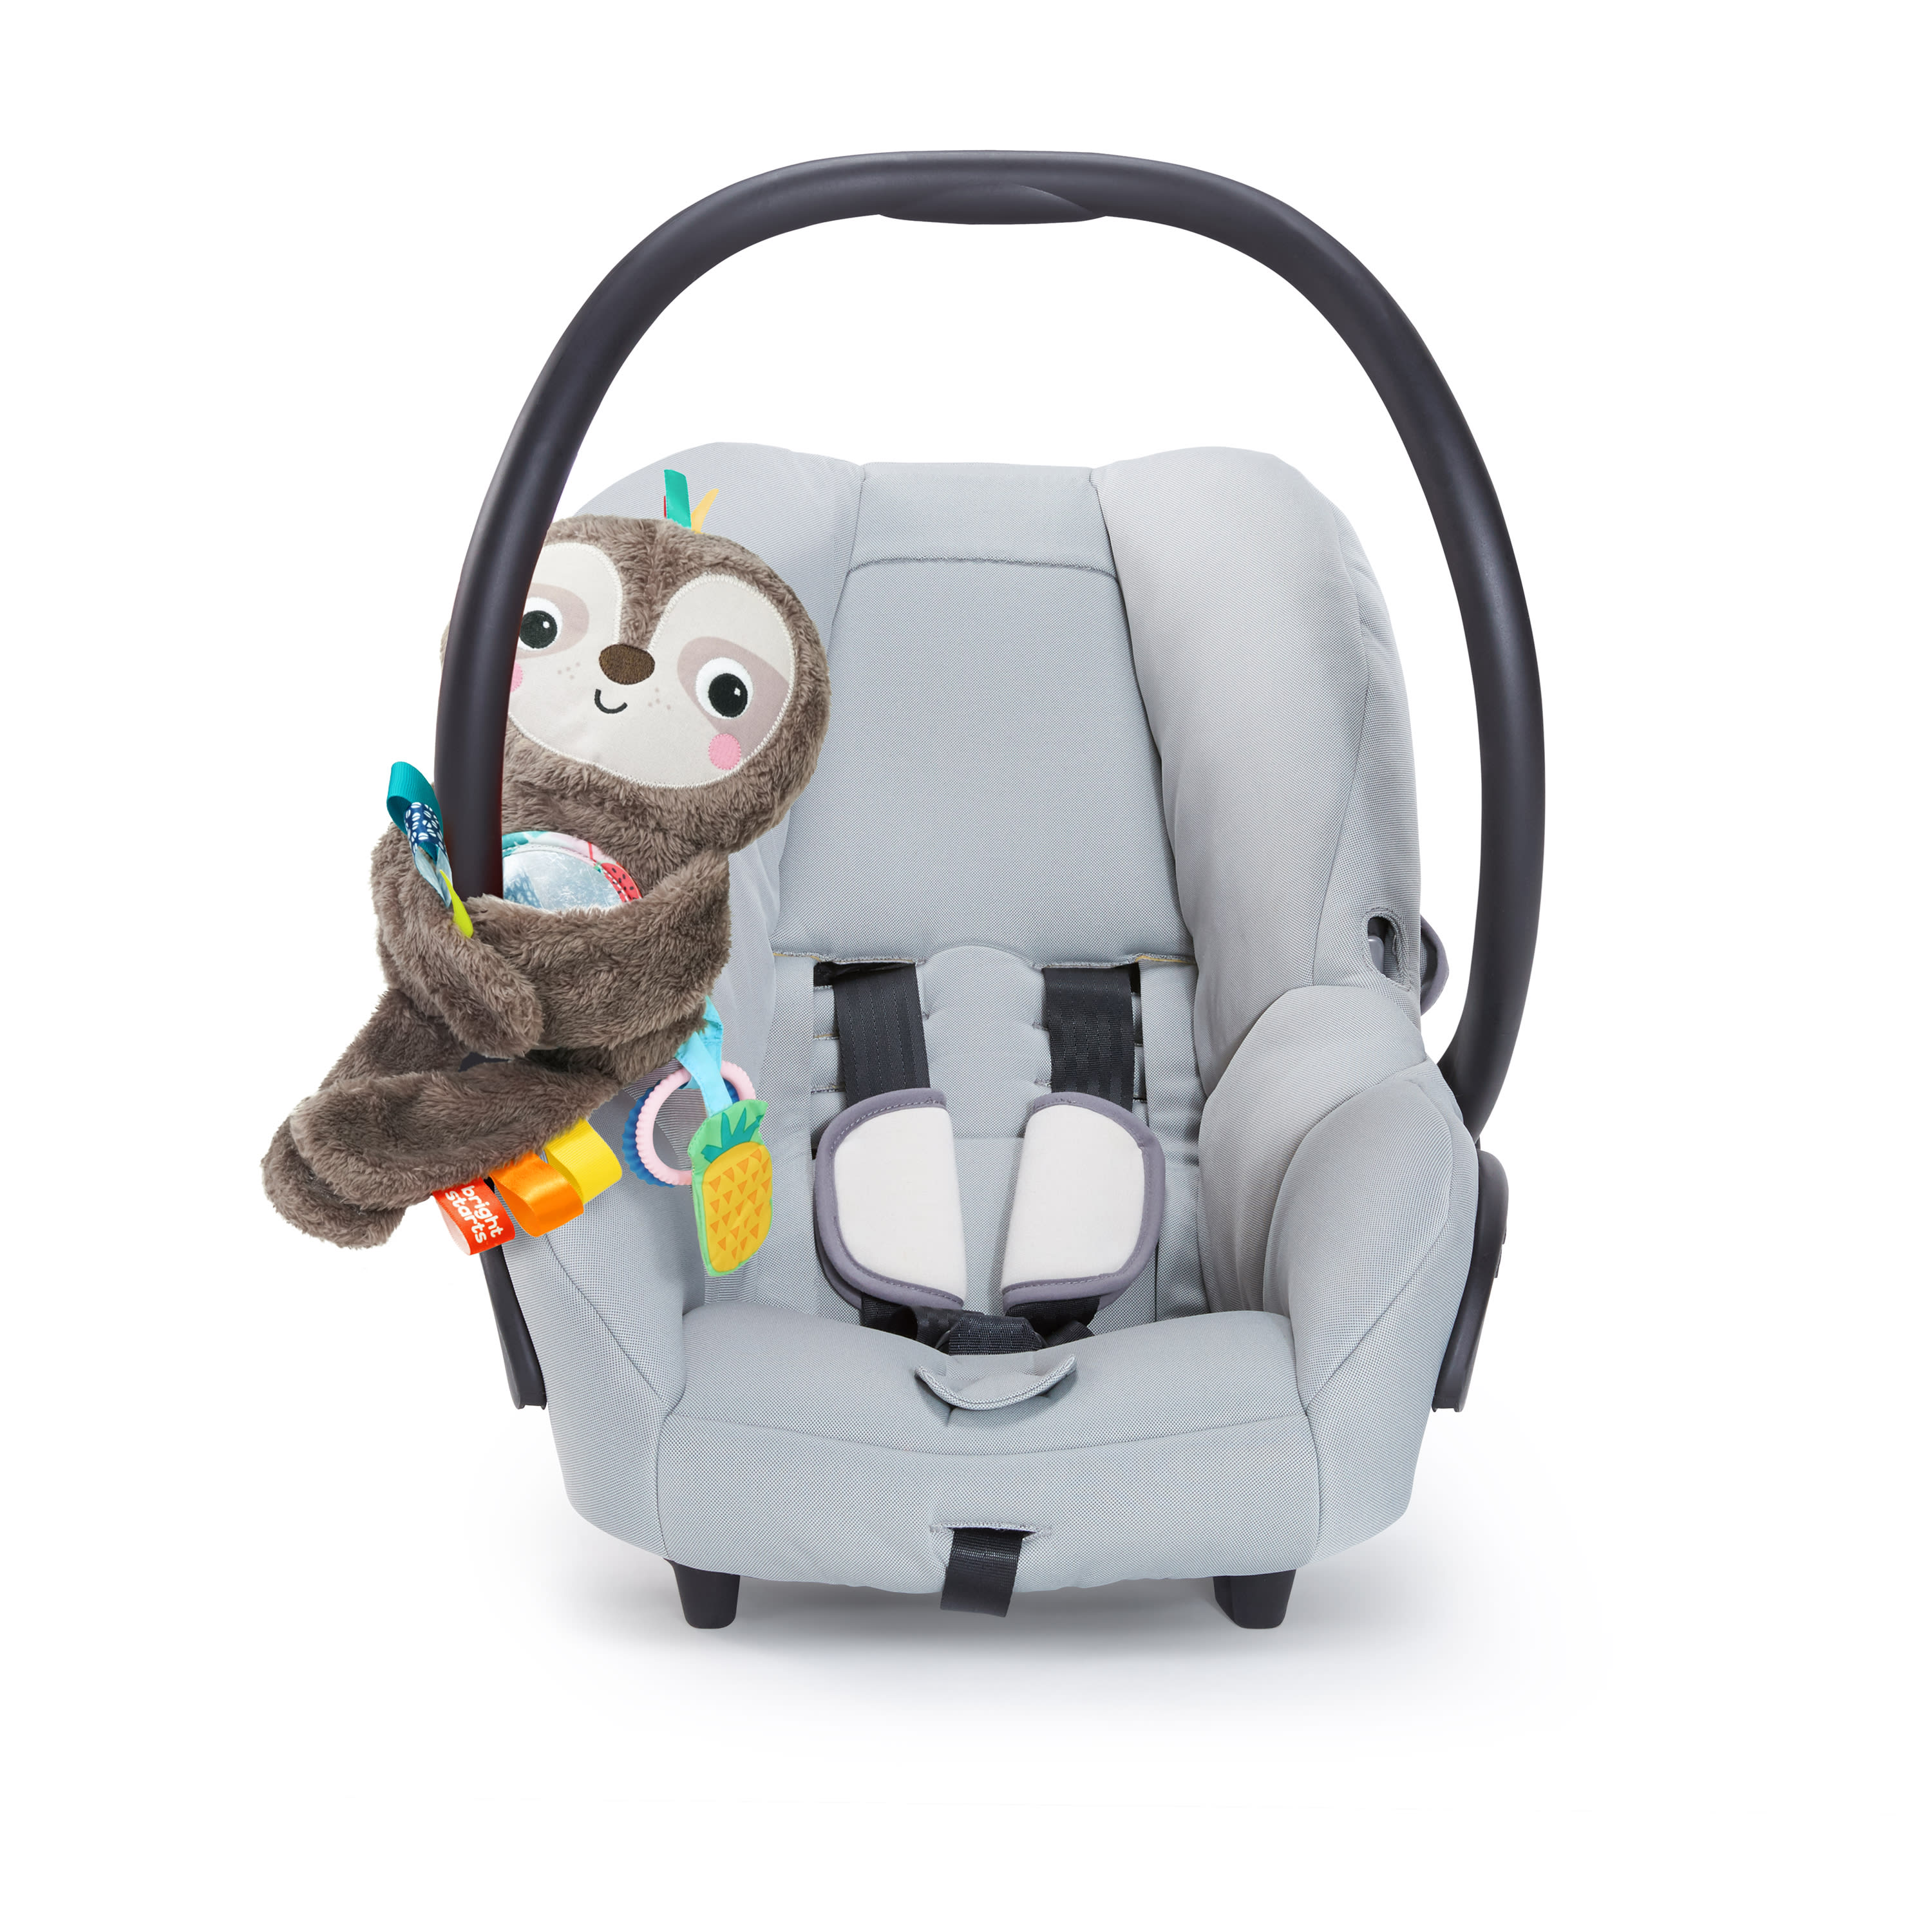 Bright Starts Slingin’ Sloth Travel Buddy Plush Attachable Stuffed Animal Infant Toy, Multicolor - image 1 of 16